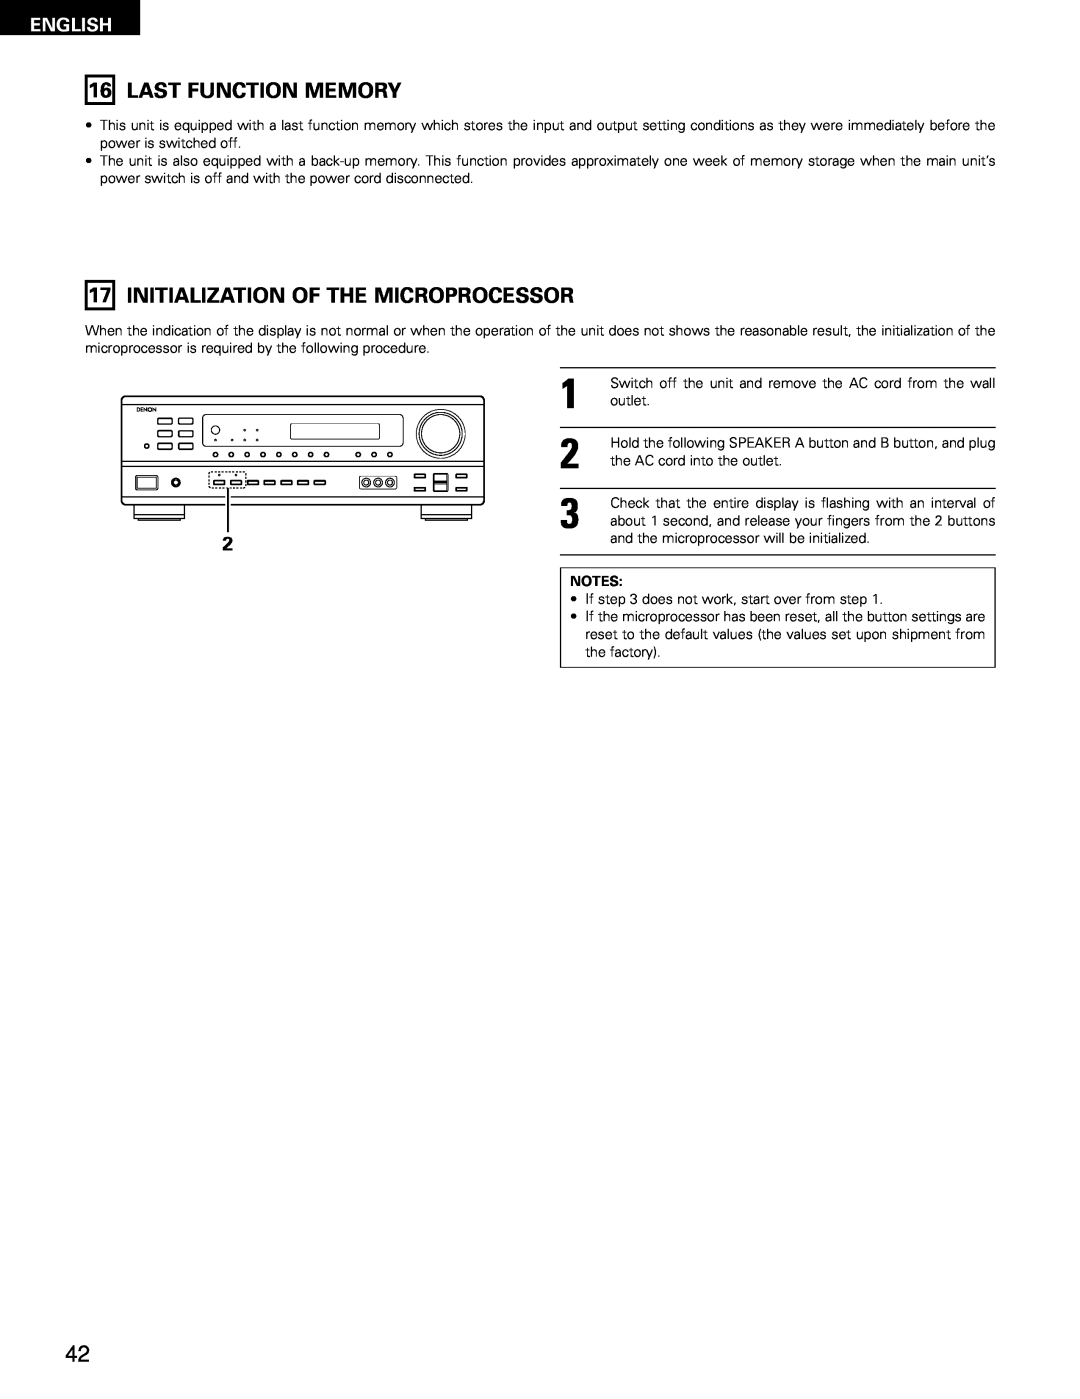 Denon AVR-1602, AVR-682 manual Last Function Memory, Initialization Of The Microprocessor, English 